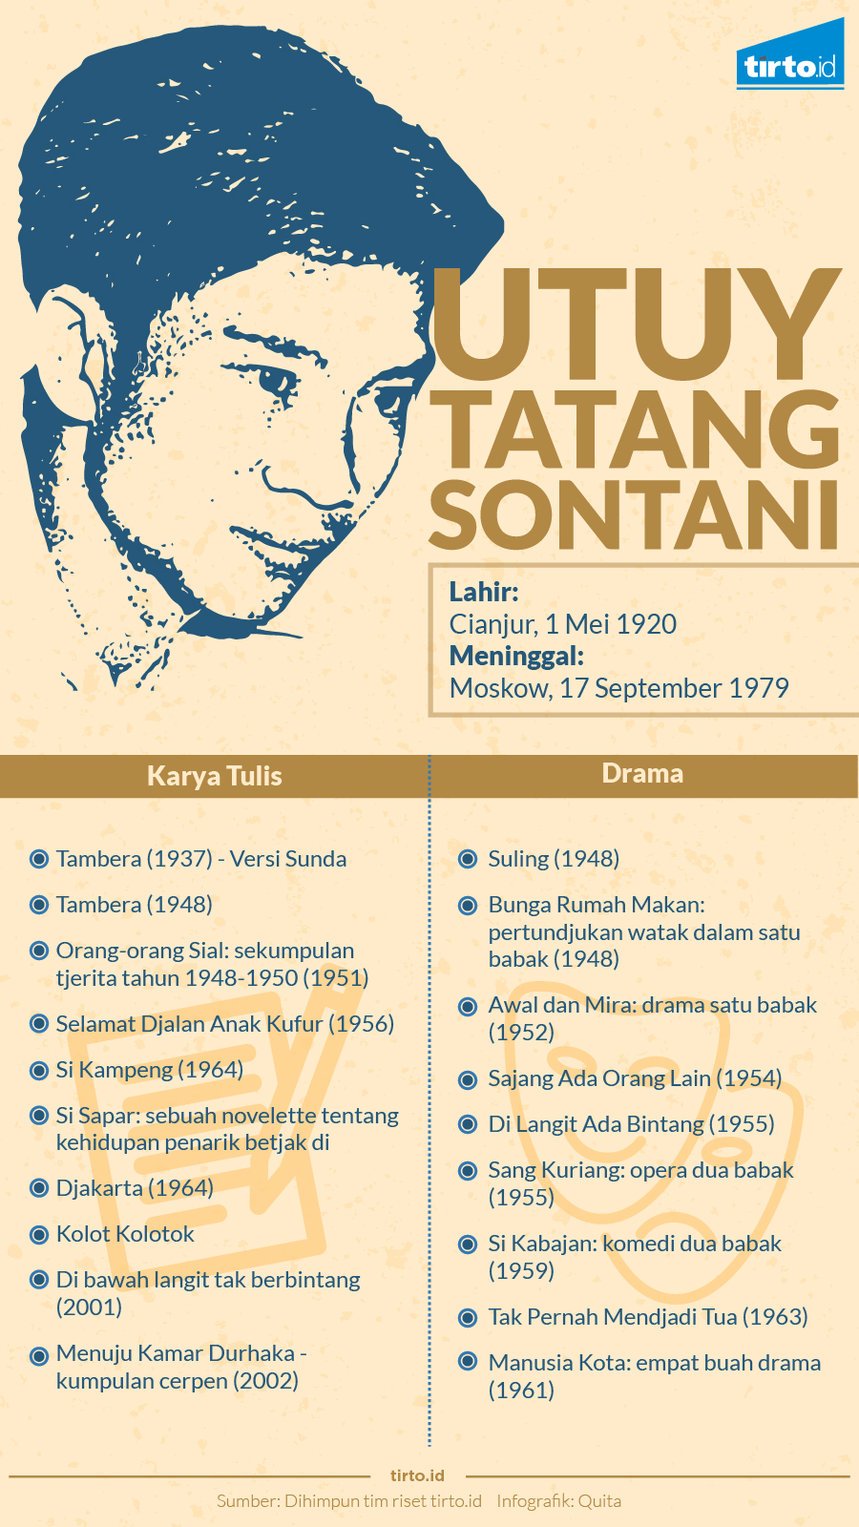 Infografik Utuy Tatang Sontani